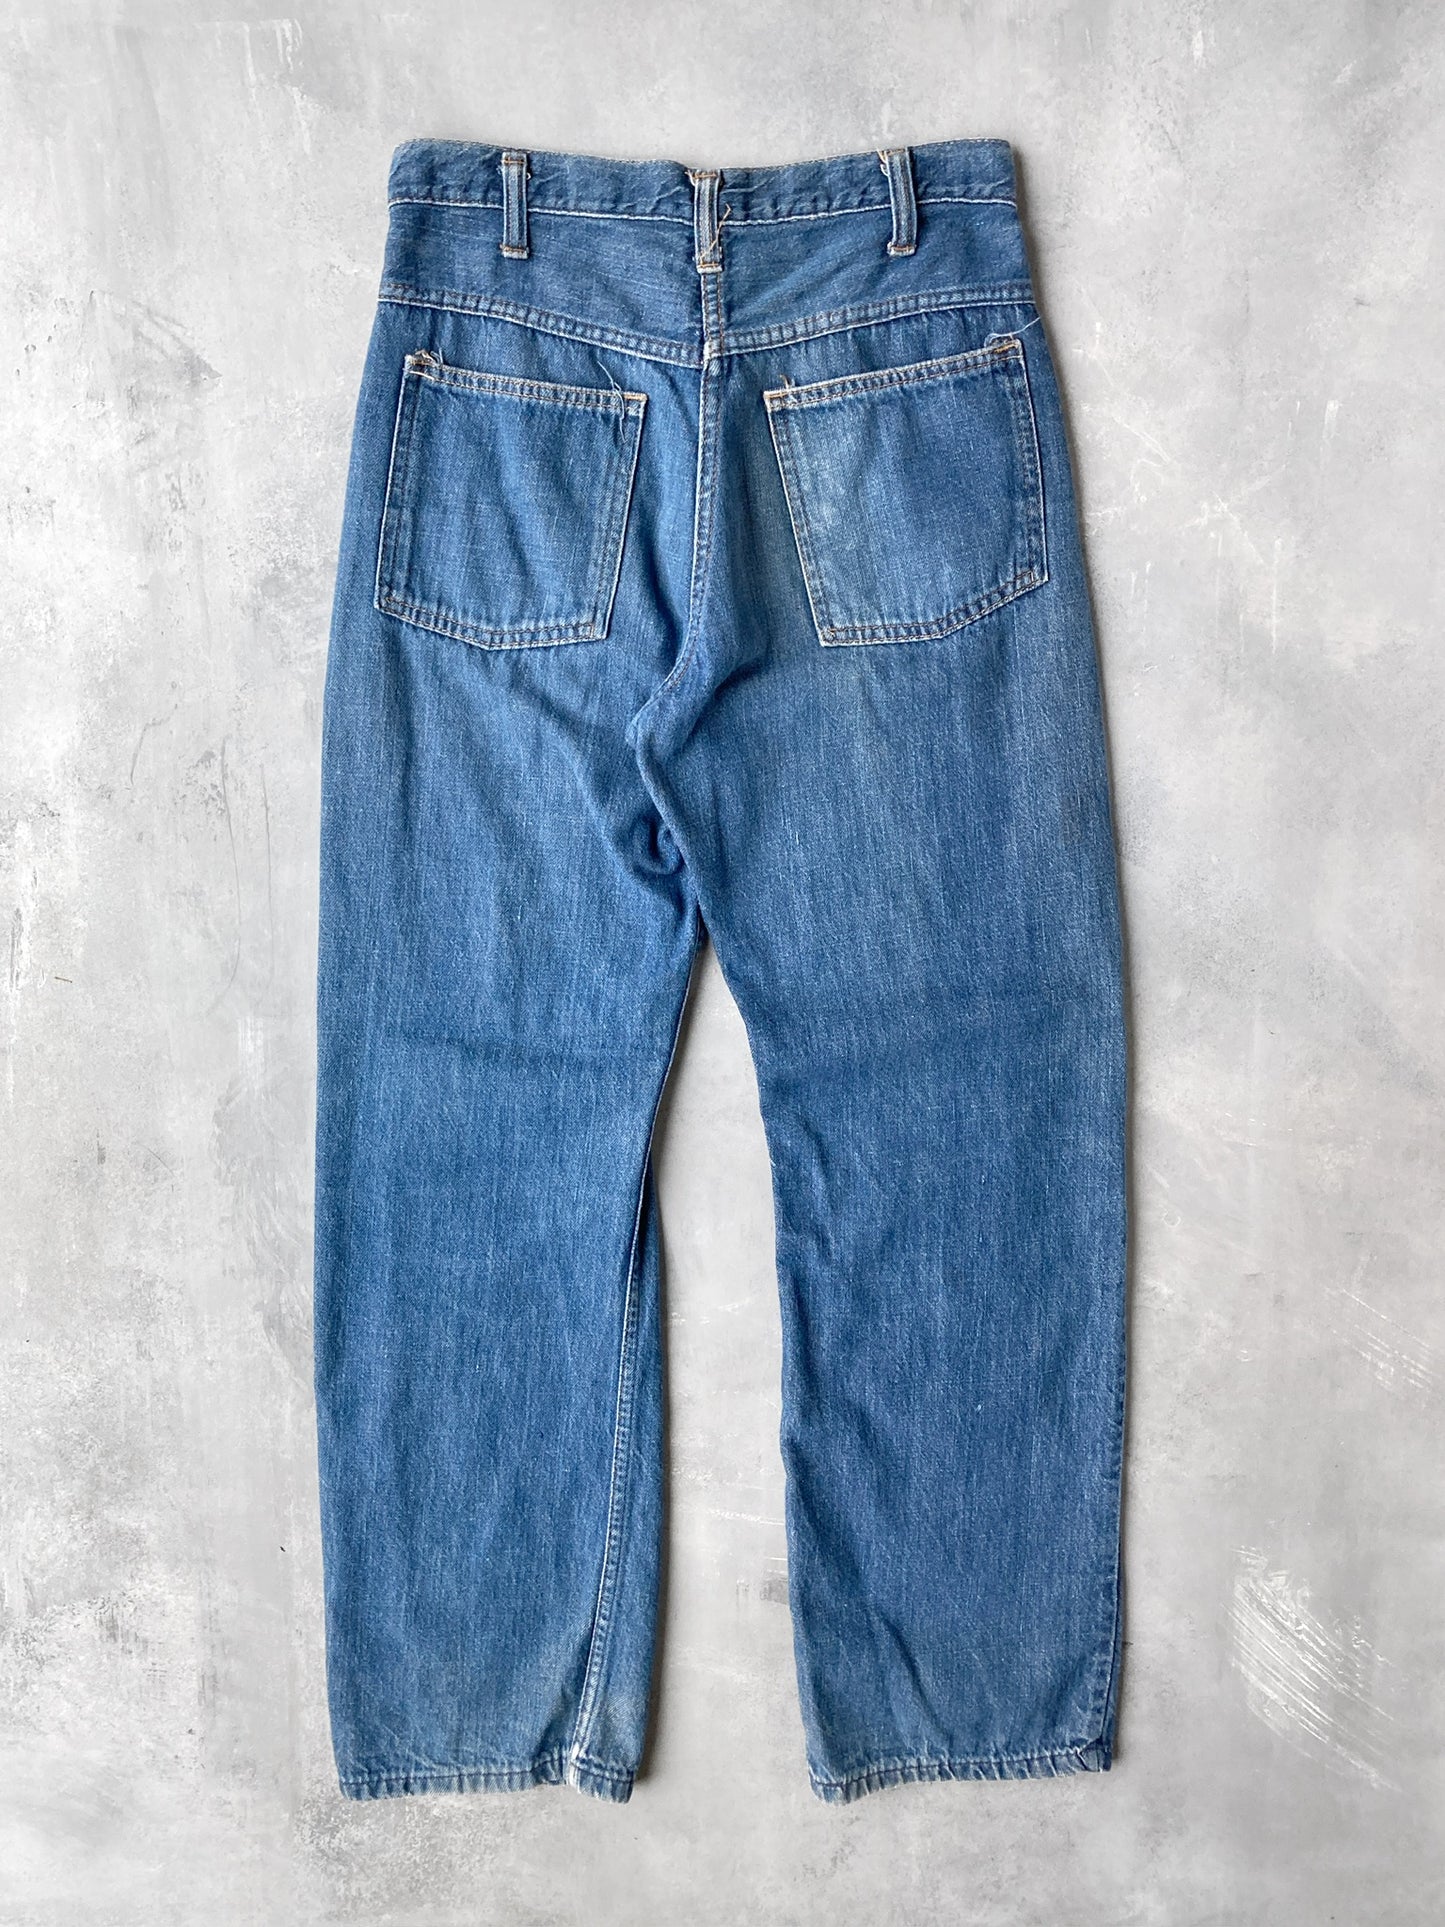 High Rise Boot Cut Jeans 70's - 27 x 29